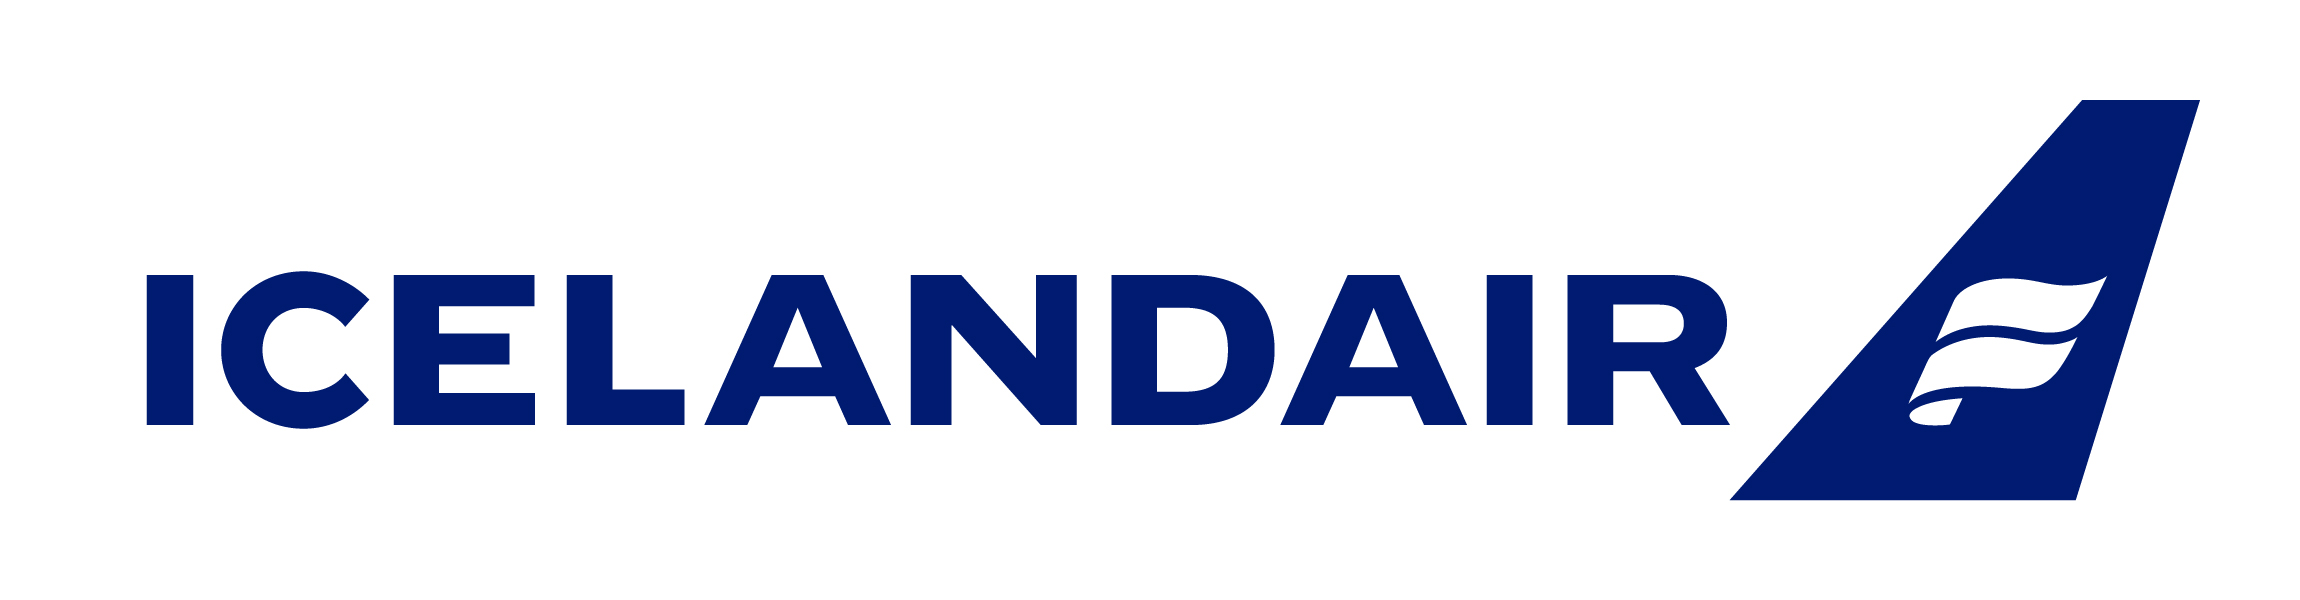 Icelandair-Logo.jpg